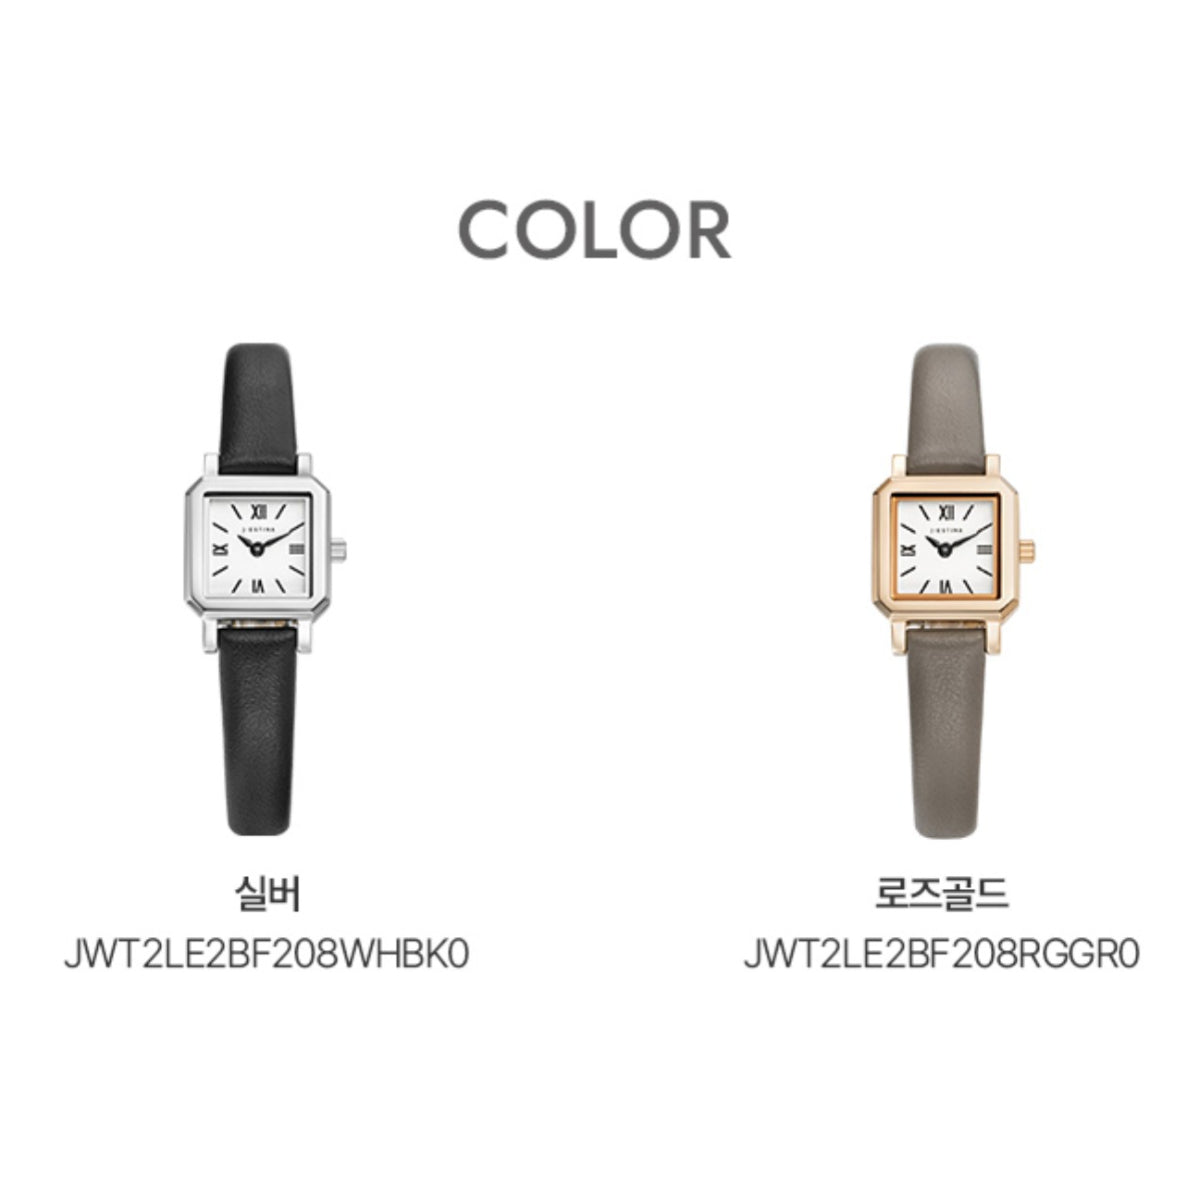 J.ESTINA Nuovo Tempo Leather Watch Rose Gold IU Pick Classic Analog Watch / from Seoul, Korea